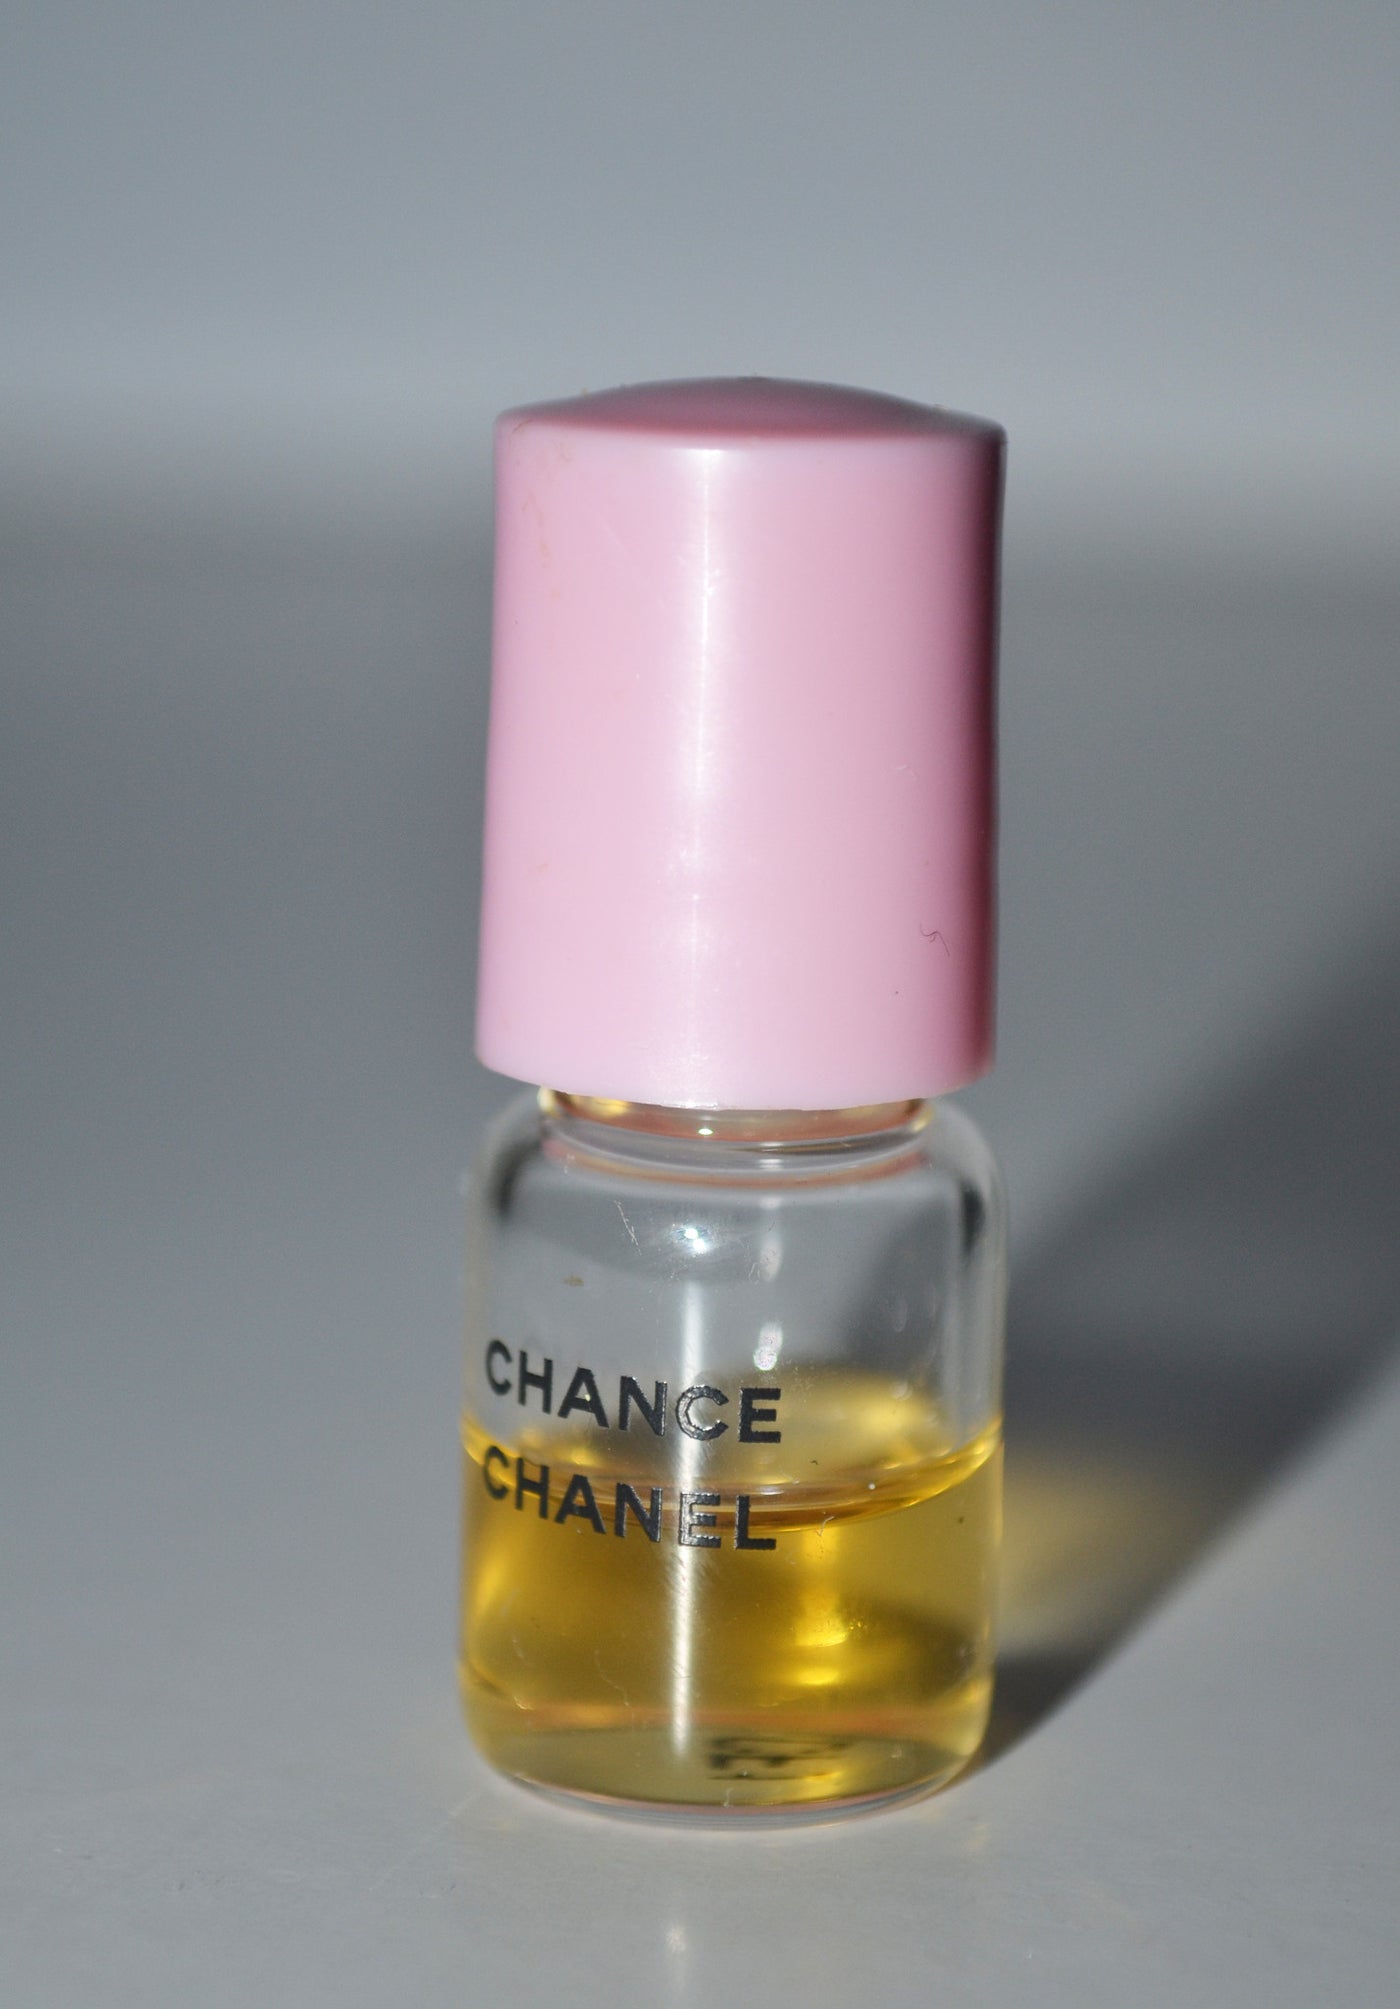 Chanel Chance Perfume Mini